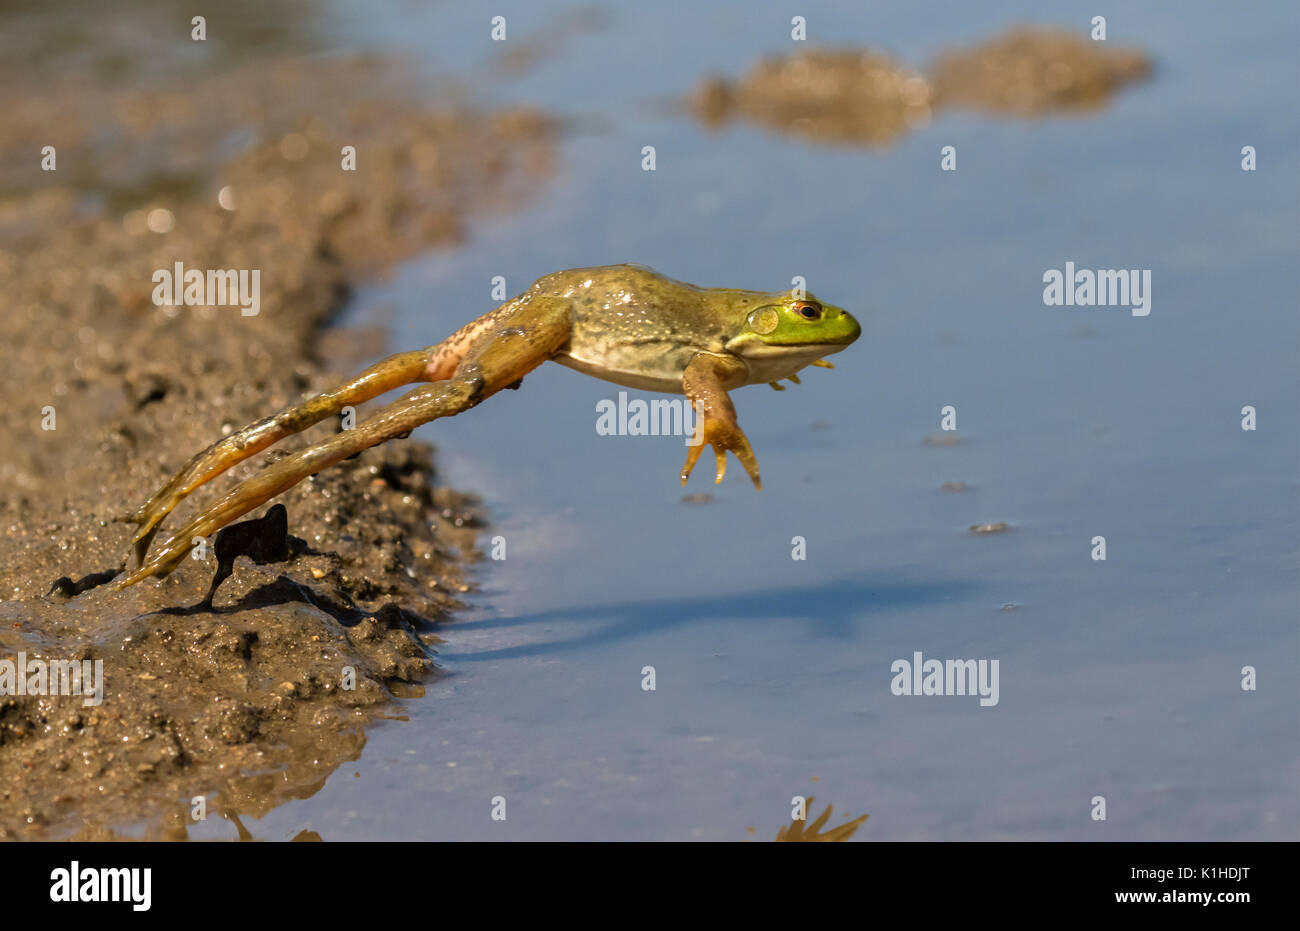 American bullfrog (Lithobates catesbeianus) saltare in una foresta lago, Ames, Iowa, USA Foto Stock